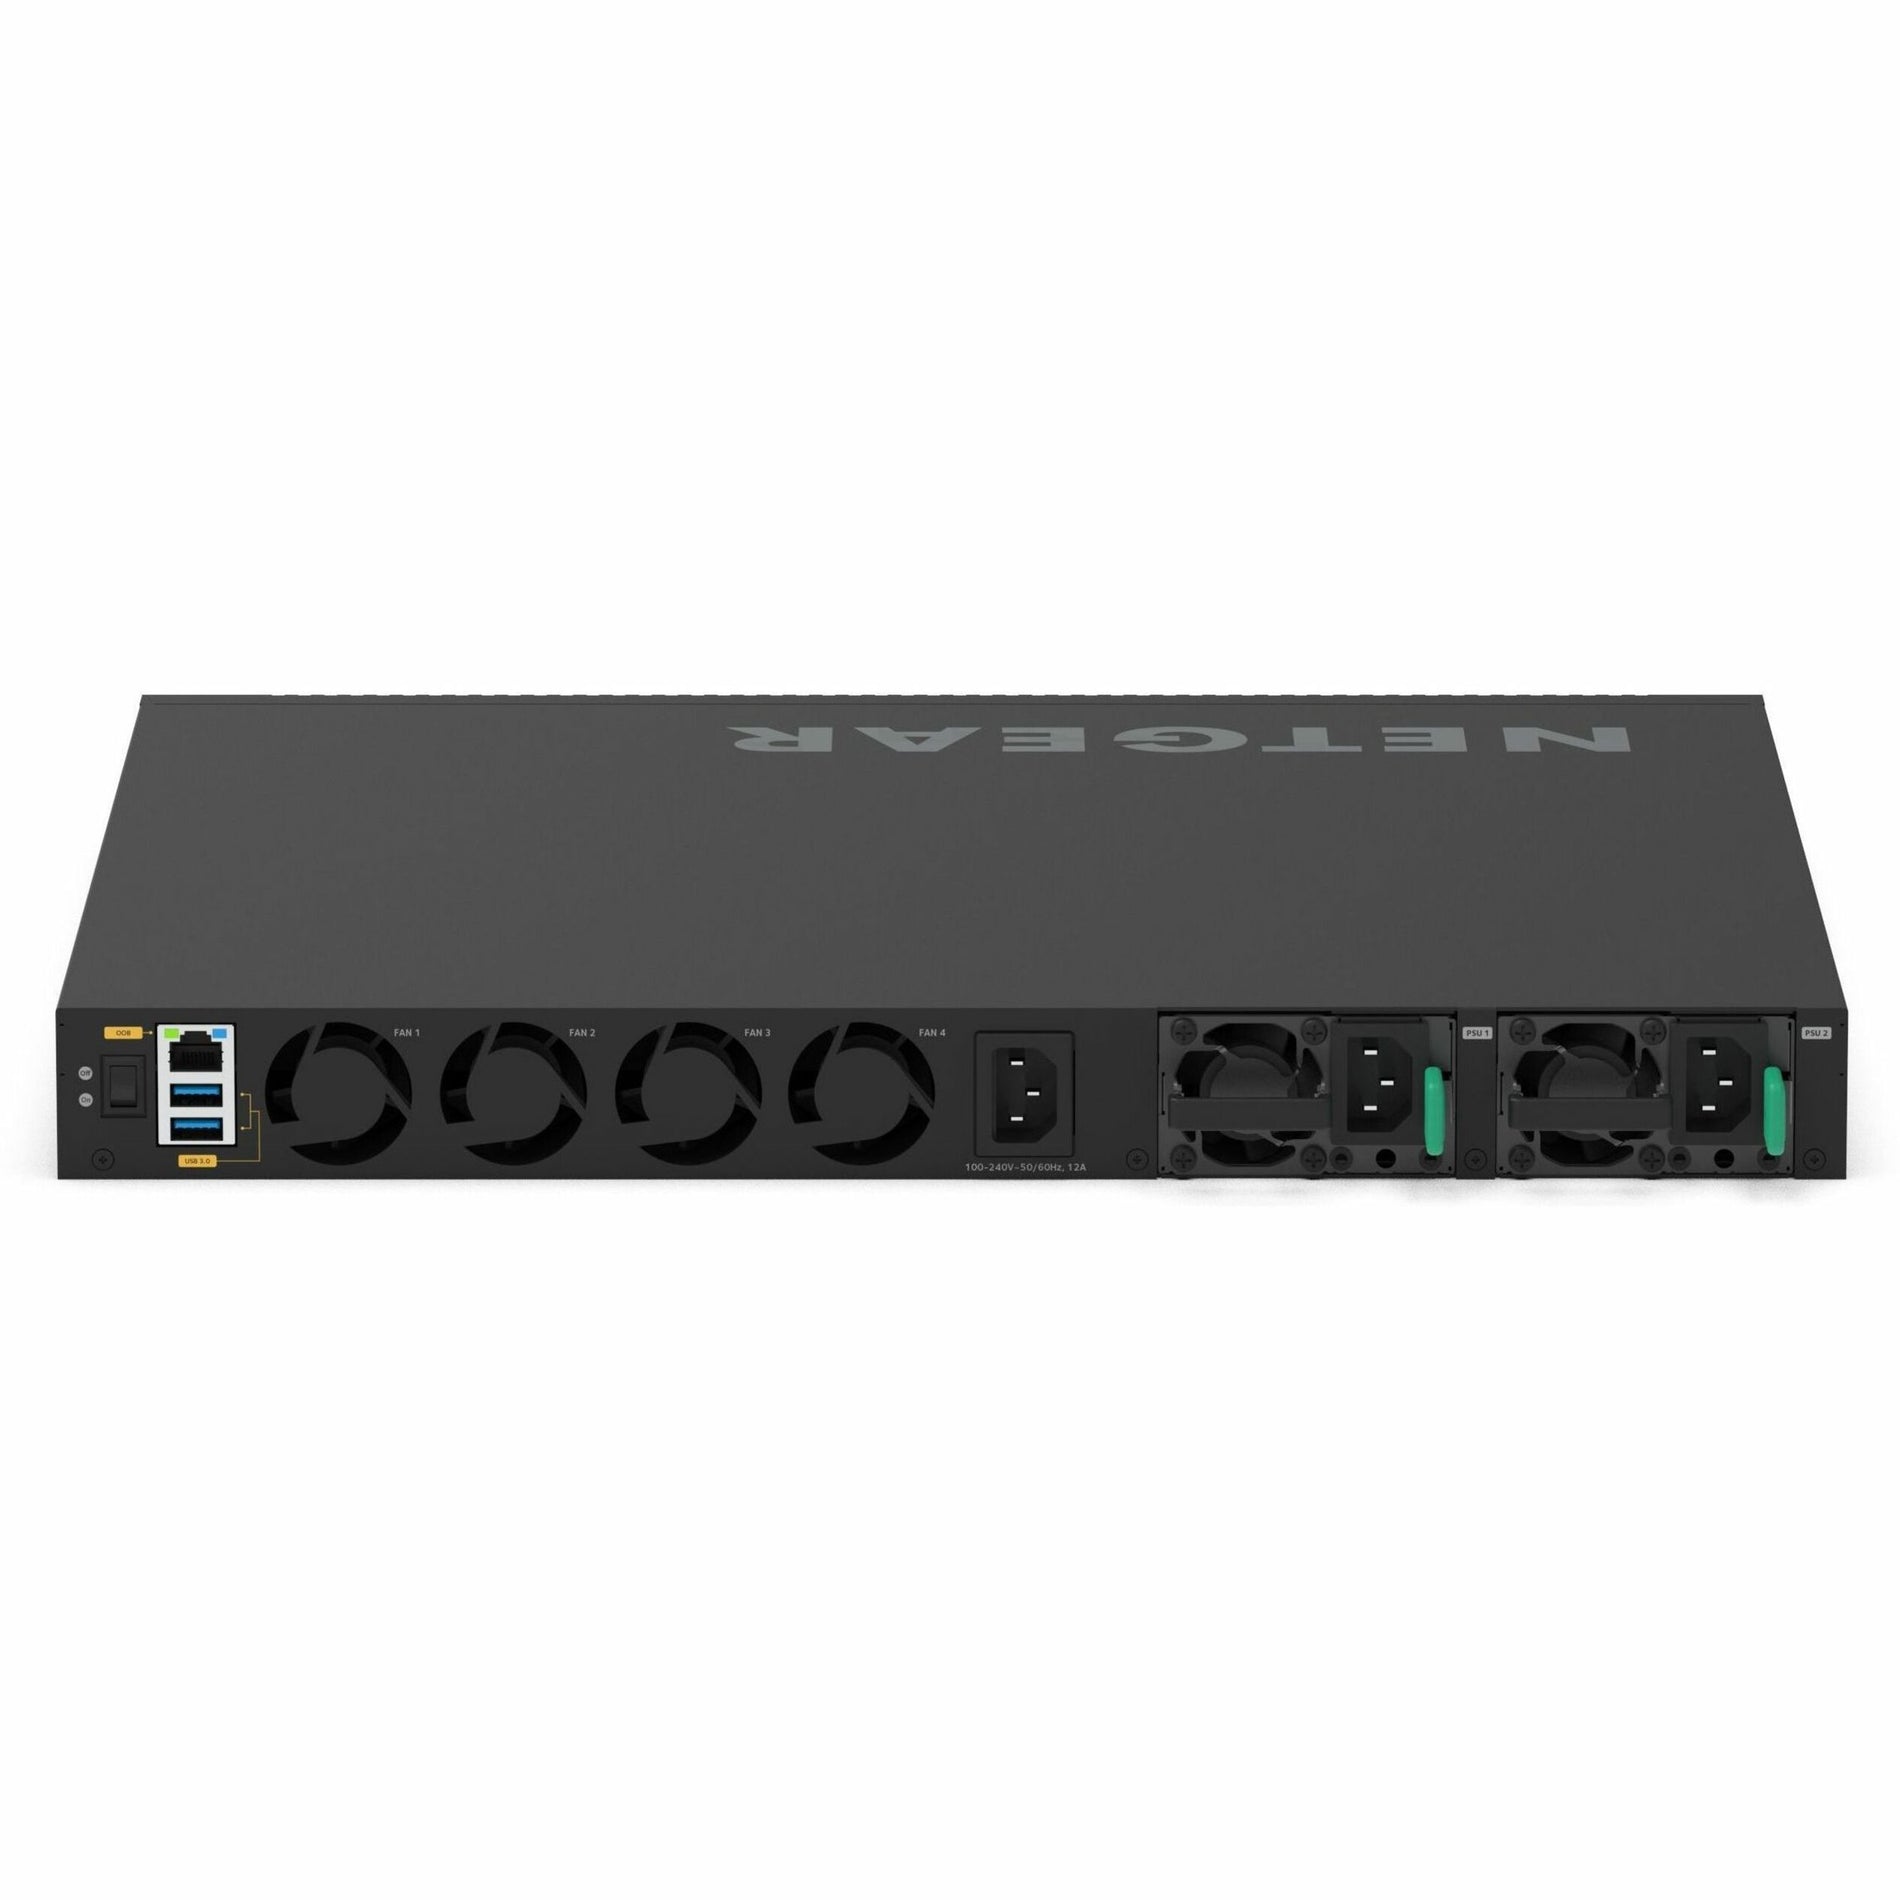 Netgear MSM4352-TAANES AV Line M4350-44M4X4V Ethernet Switch, 48 Ports, 25GBase-X, 10GBase-X, 2.5GBase-T, PoE++ Support